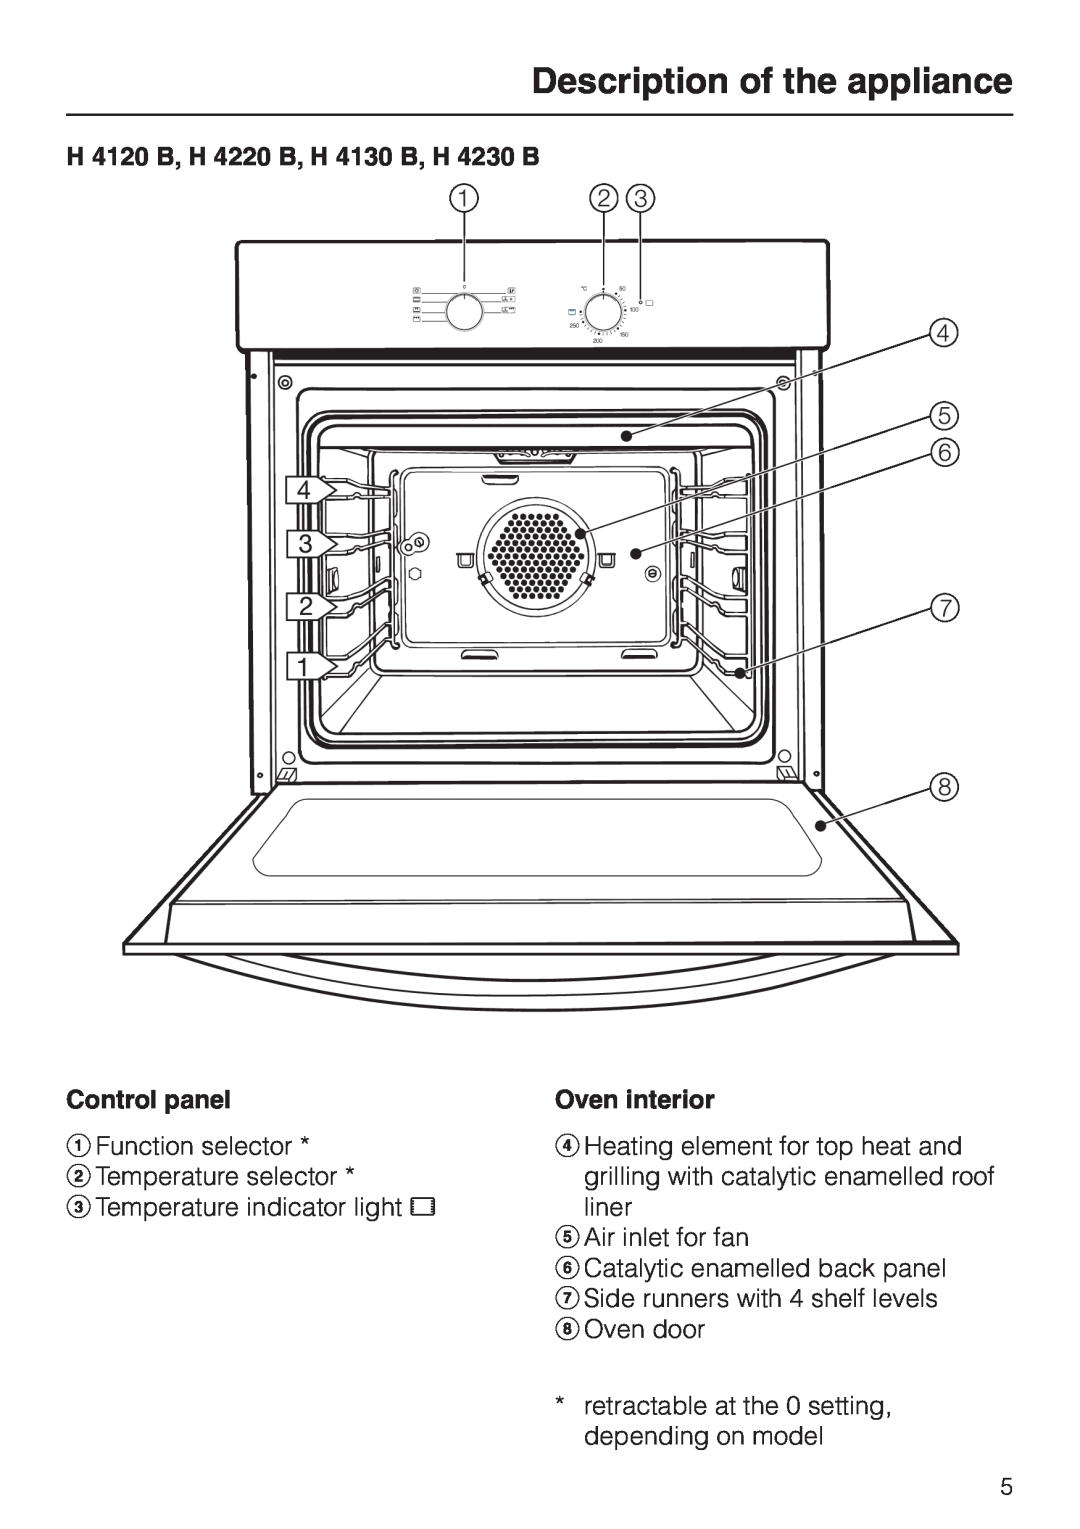 Miele H 4140, H 4150 H 4120 B, H 4220 B, H 4130 B, H 4230 B, Description of the appliance, Control panel, Oven interior 